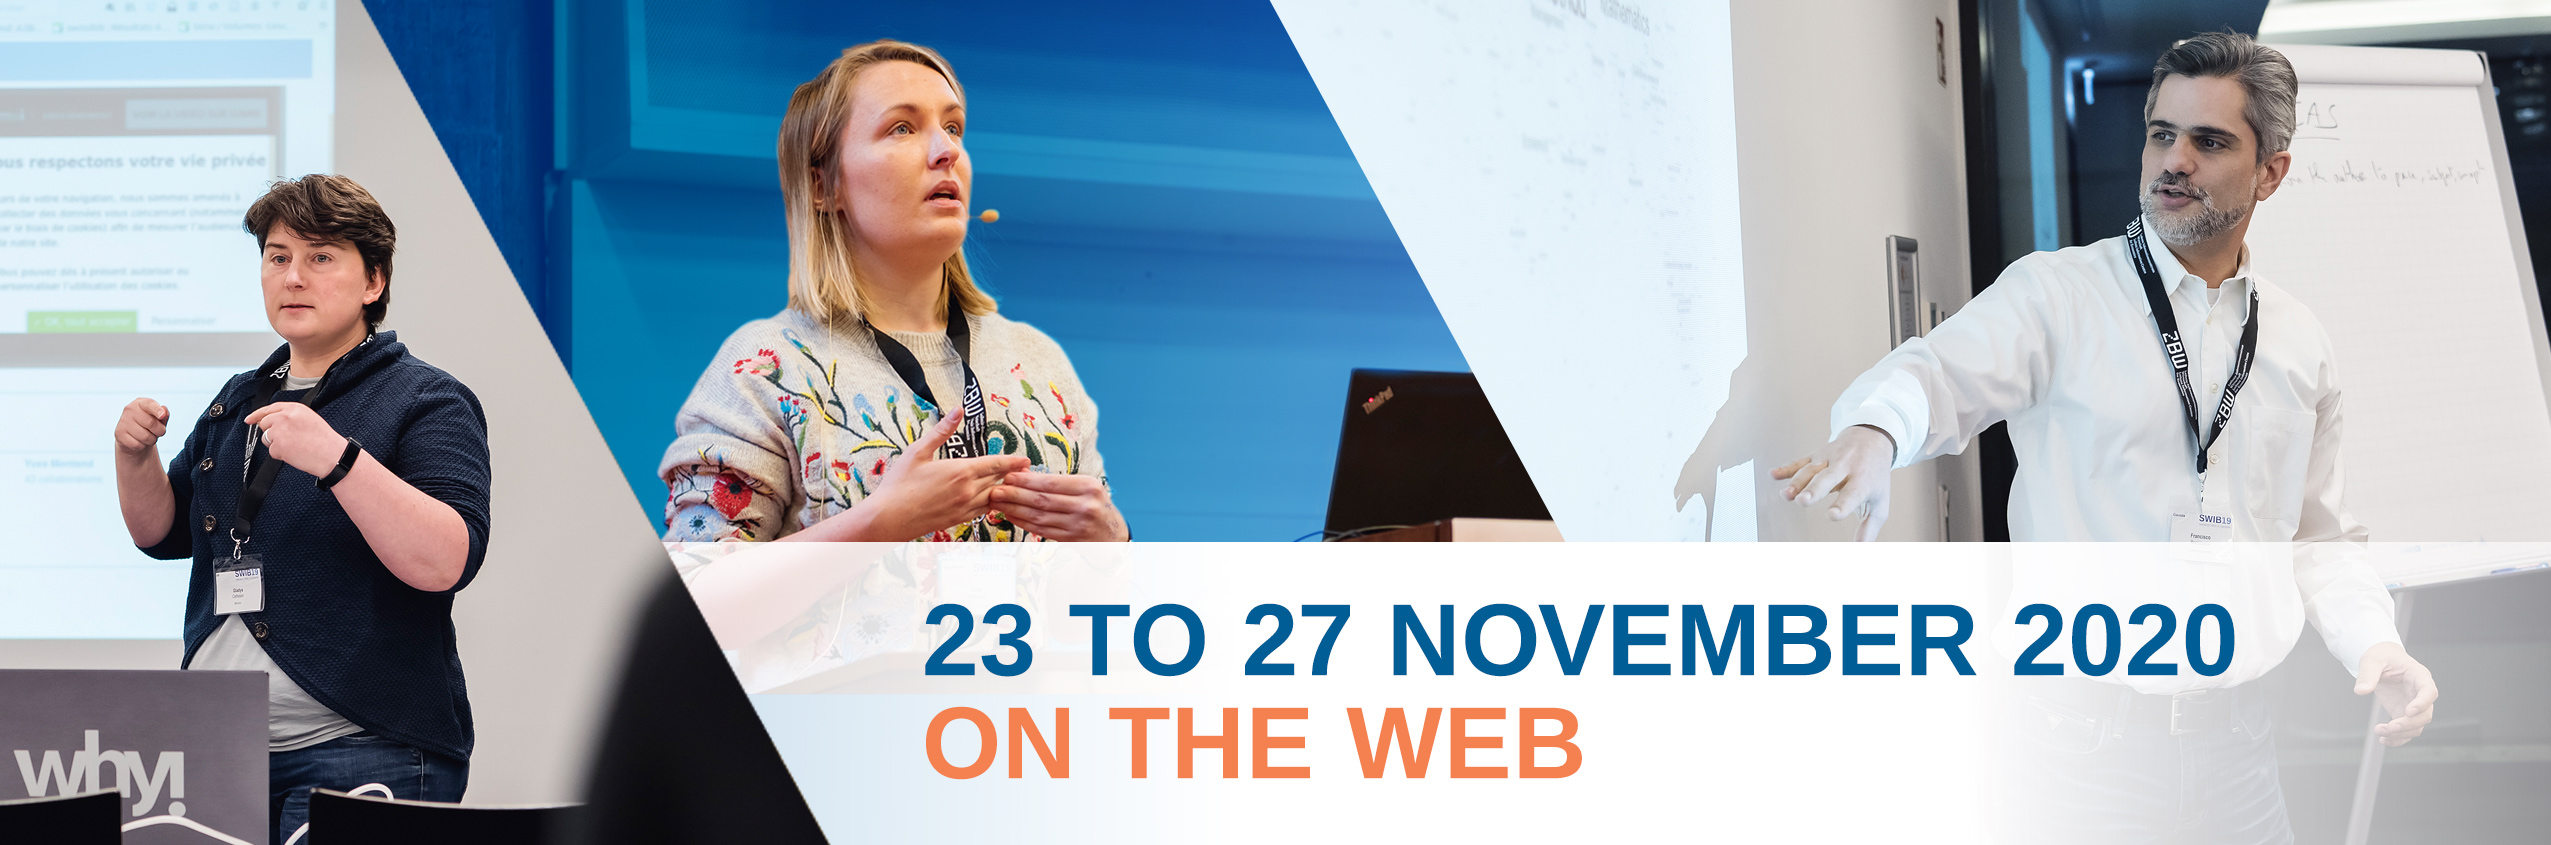 Logo: SWIB20 - Semantic Web in Libraries - 23 - 27 November 2020, on the web